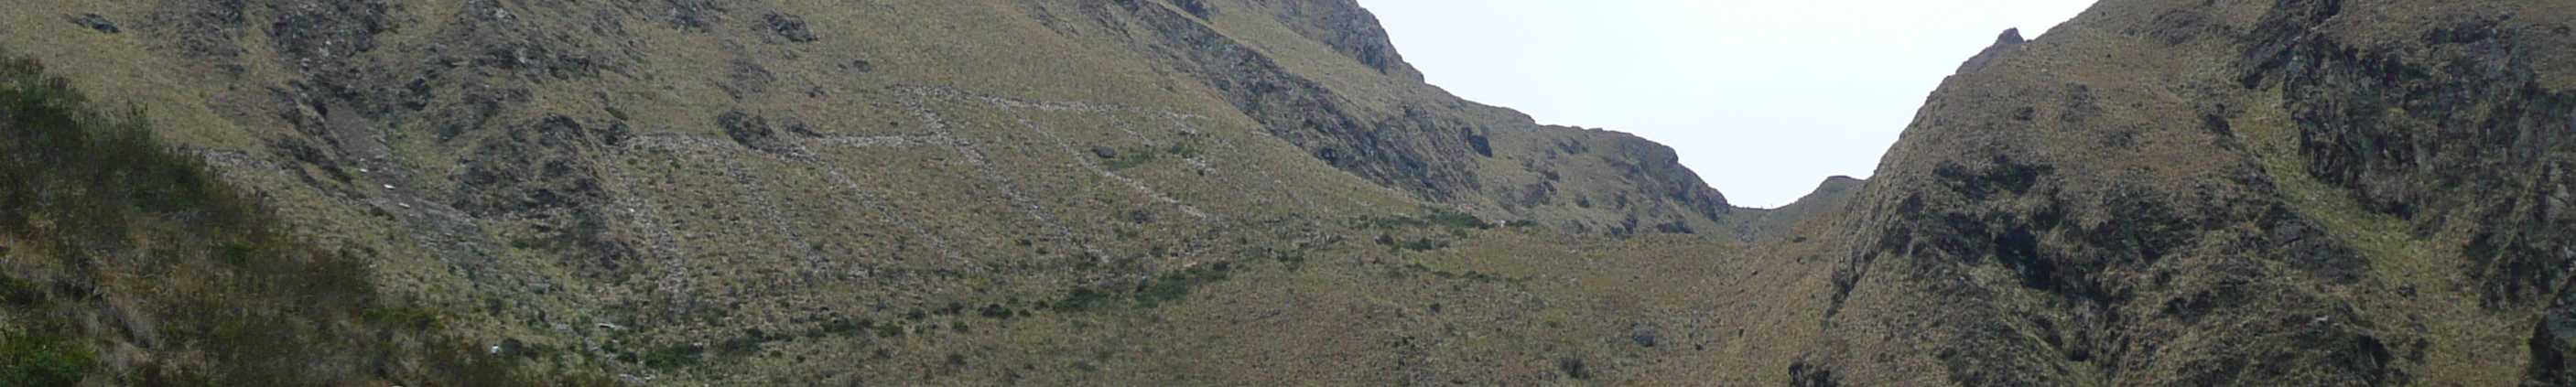 dag17: Inca Trail 2